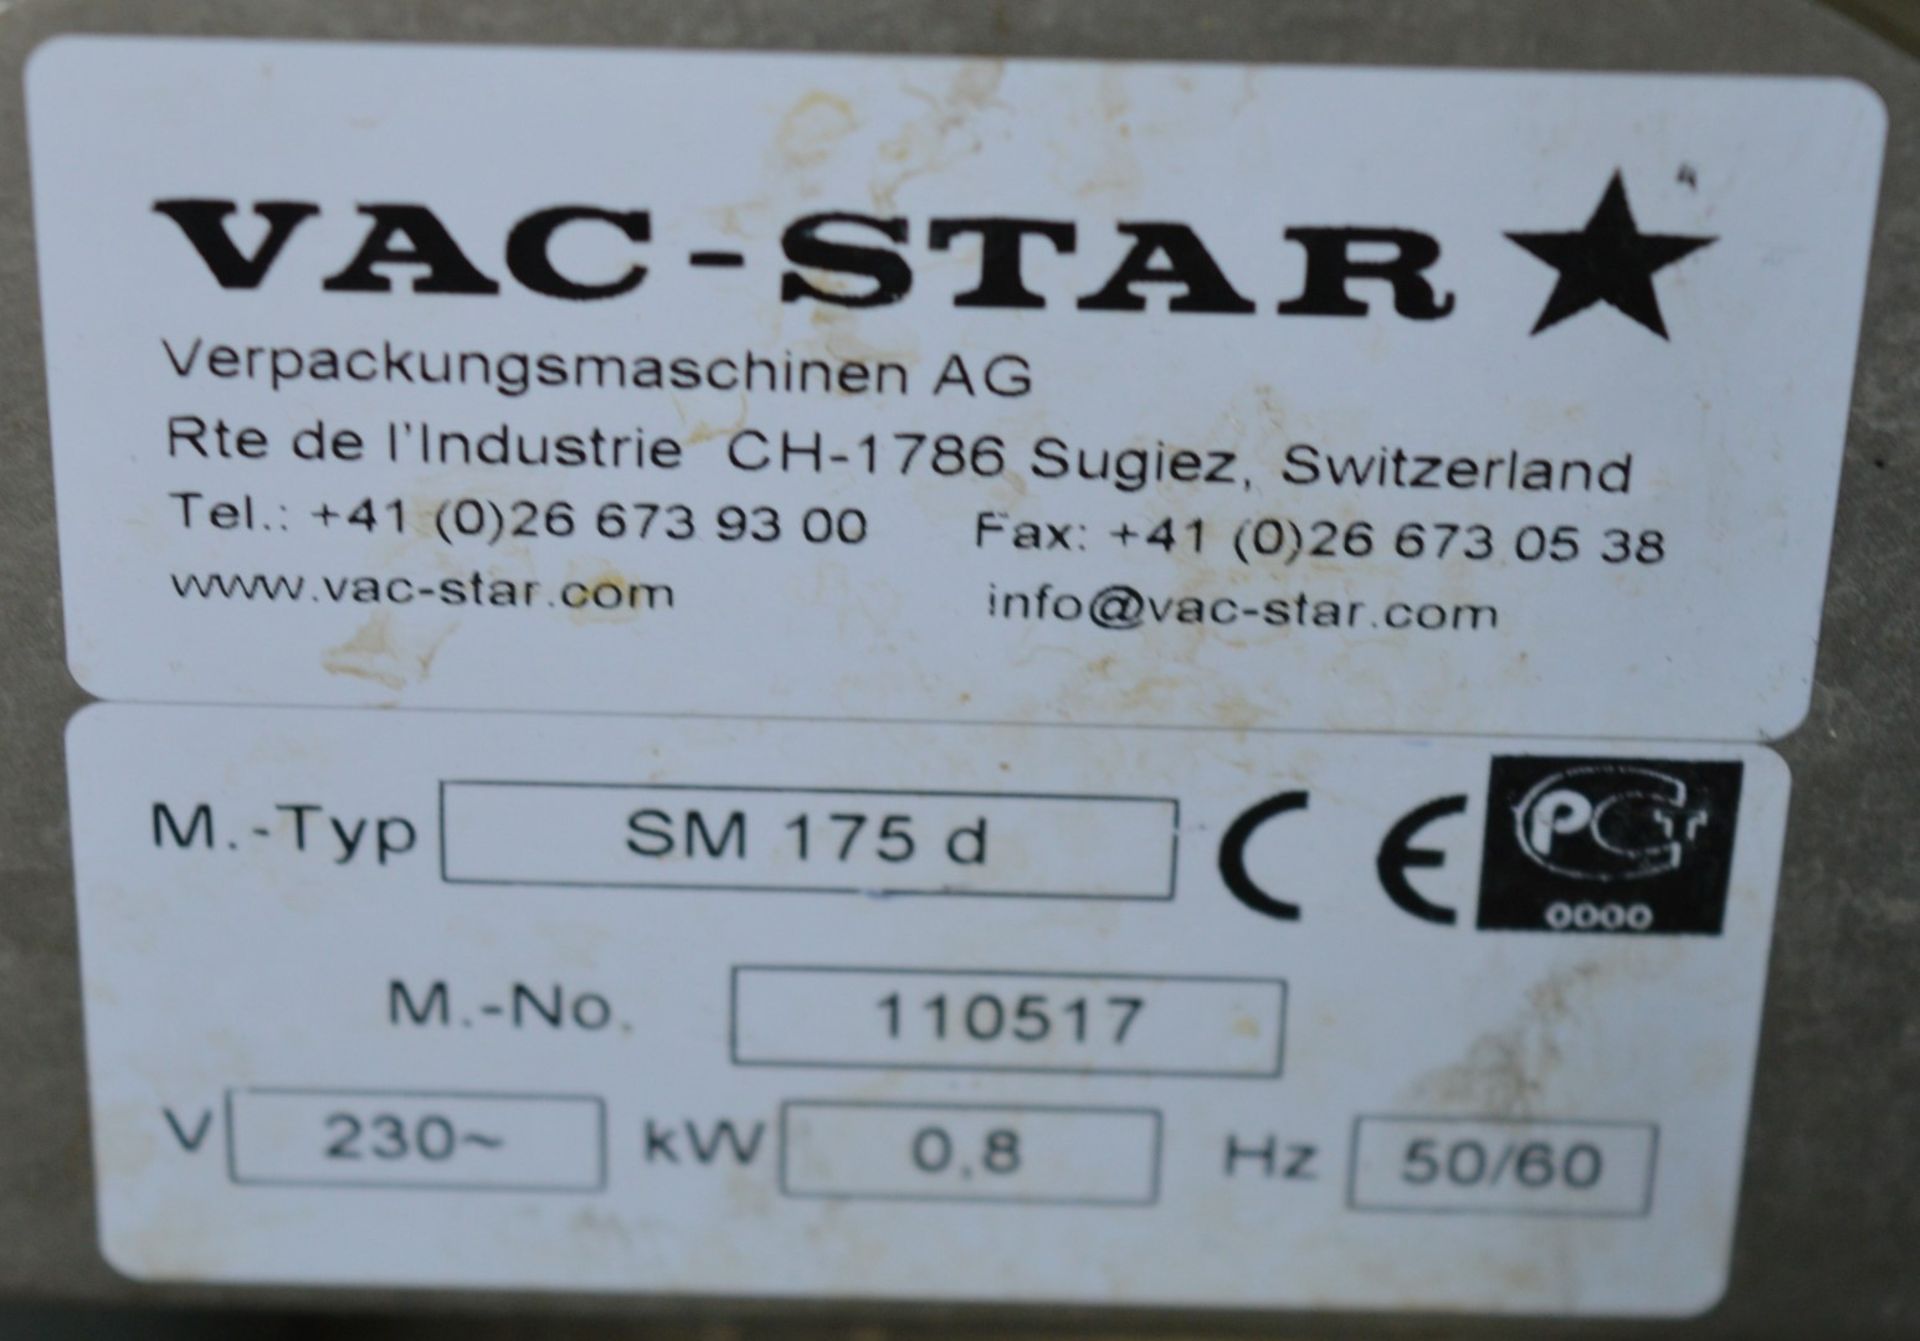 1 x VacStar Vacuum Packaging Machine - Desktop Transportable Size - H28 x W63 x D25 cms - Model SM - Image 4 of 6